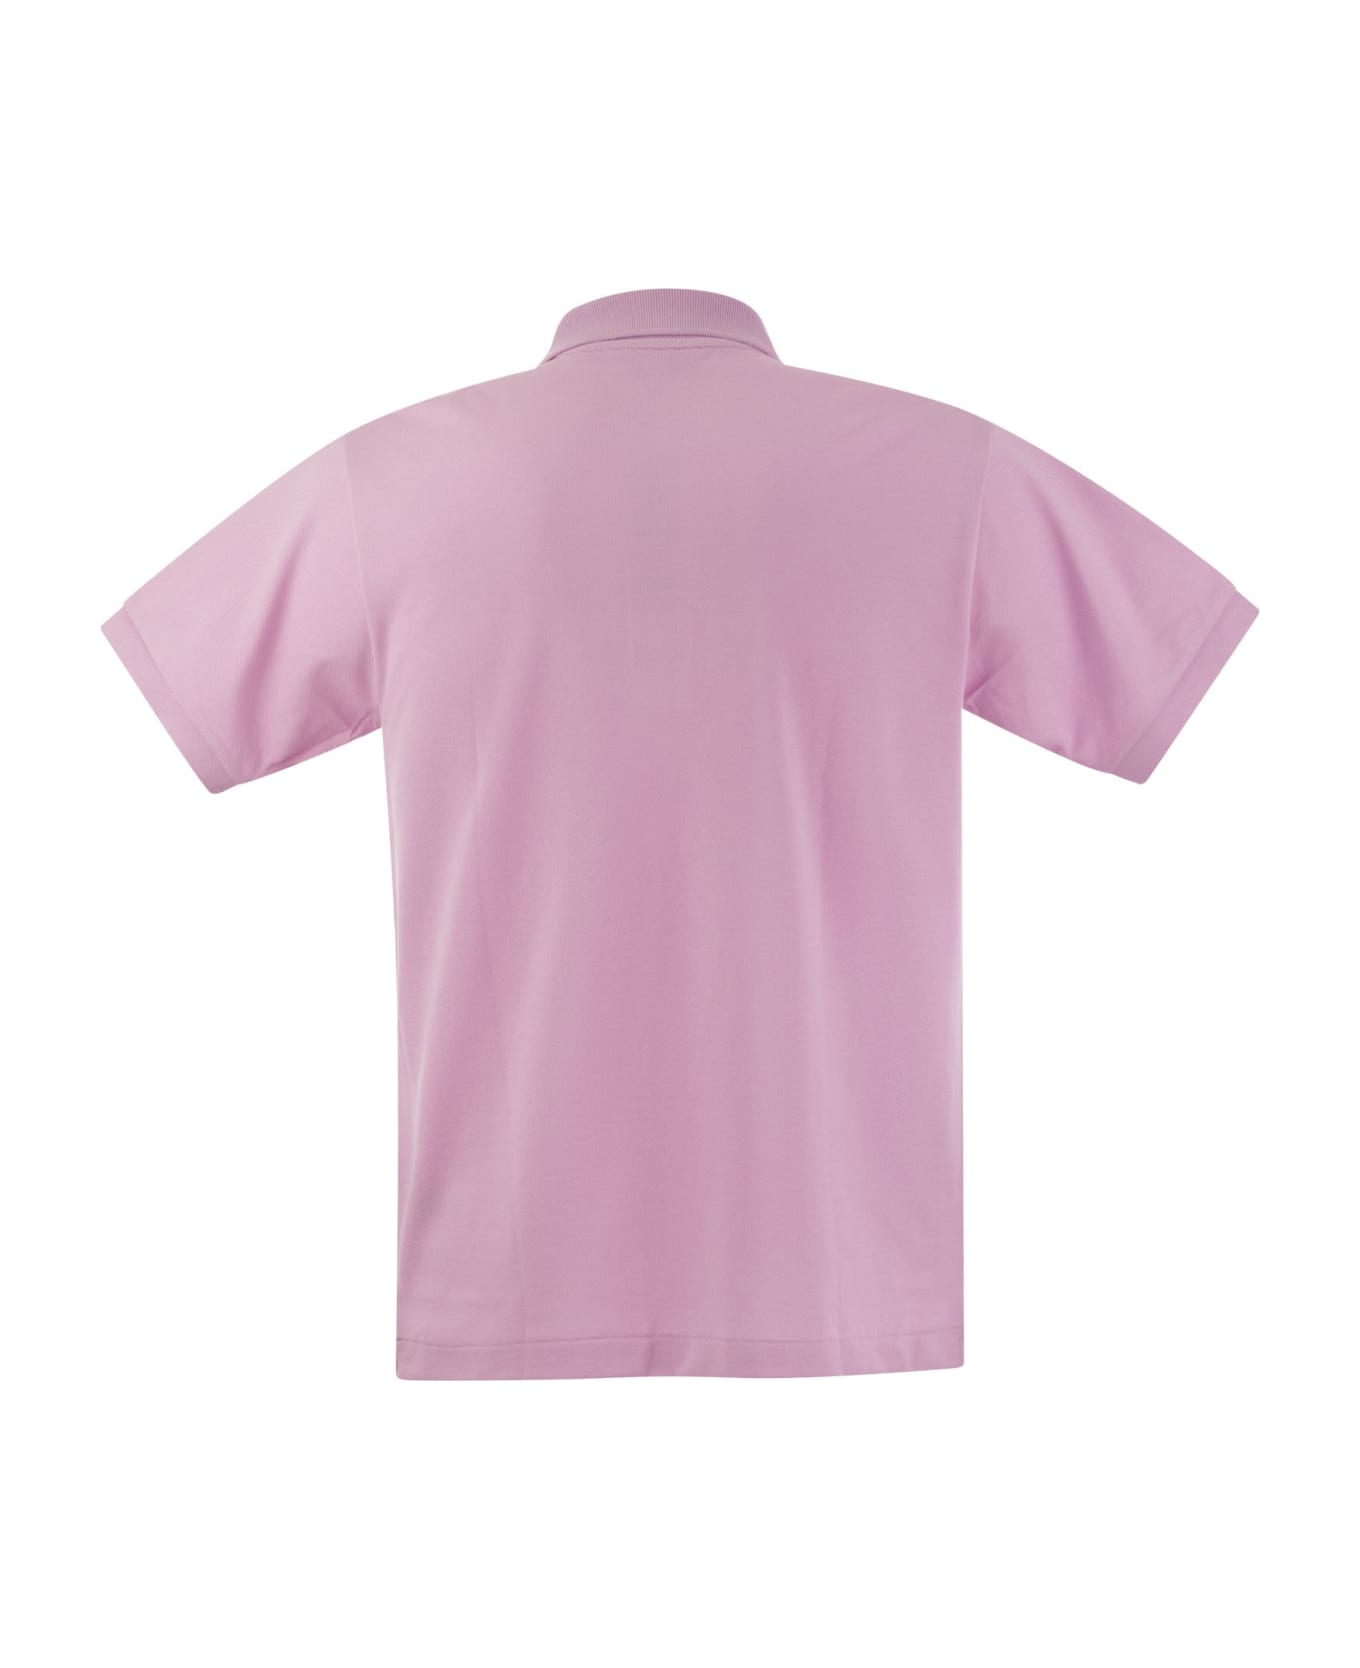 Lacoste Classic Fit Cotton Pique Polo Shirt - Pink